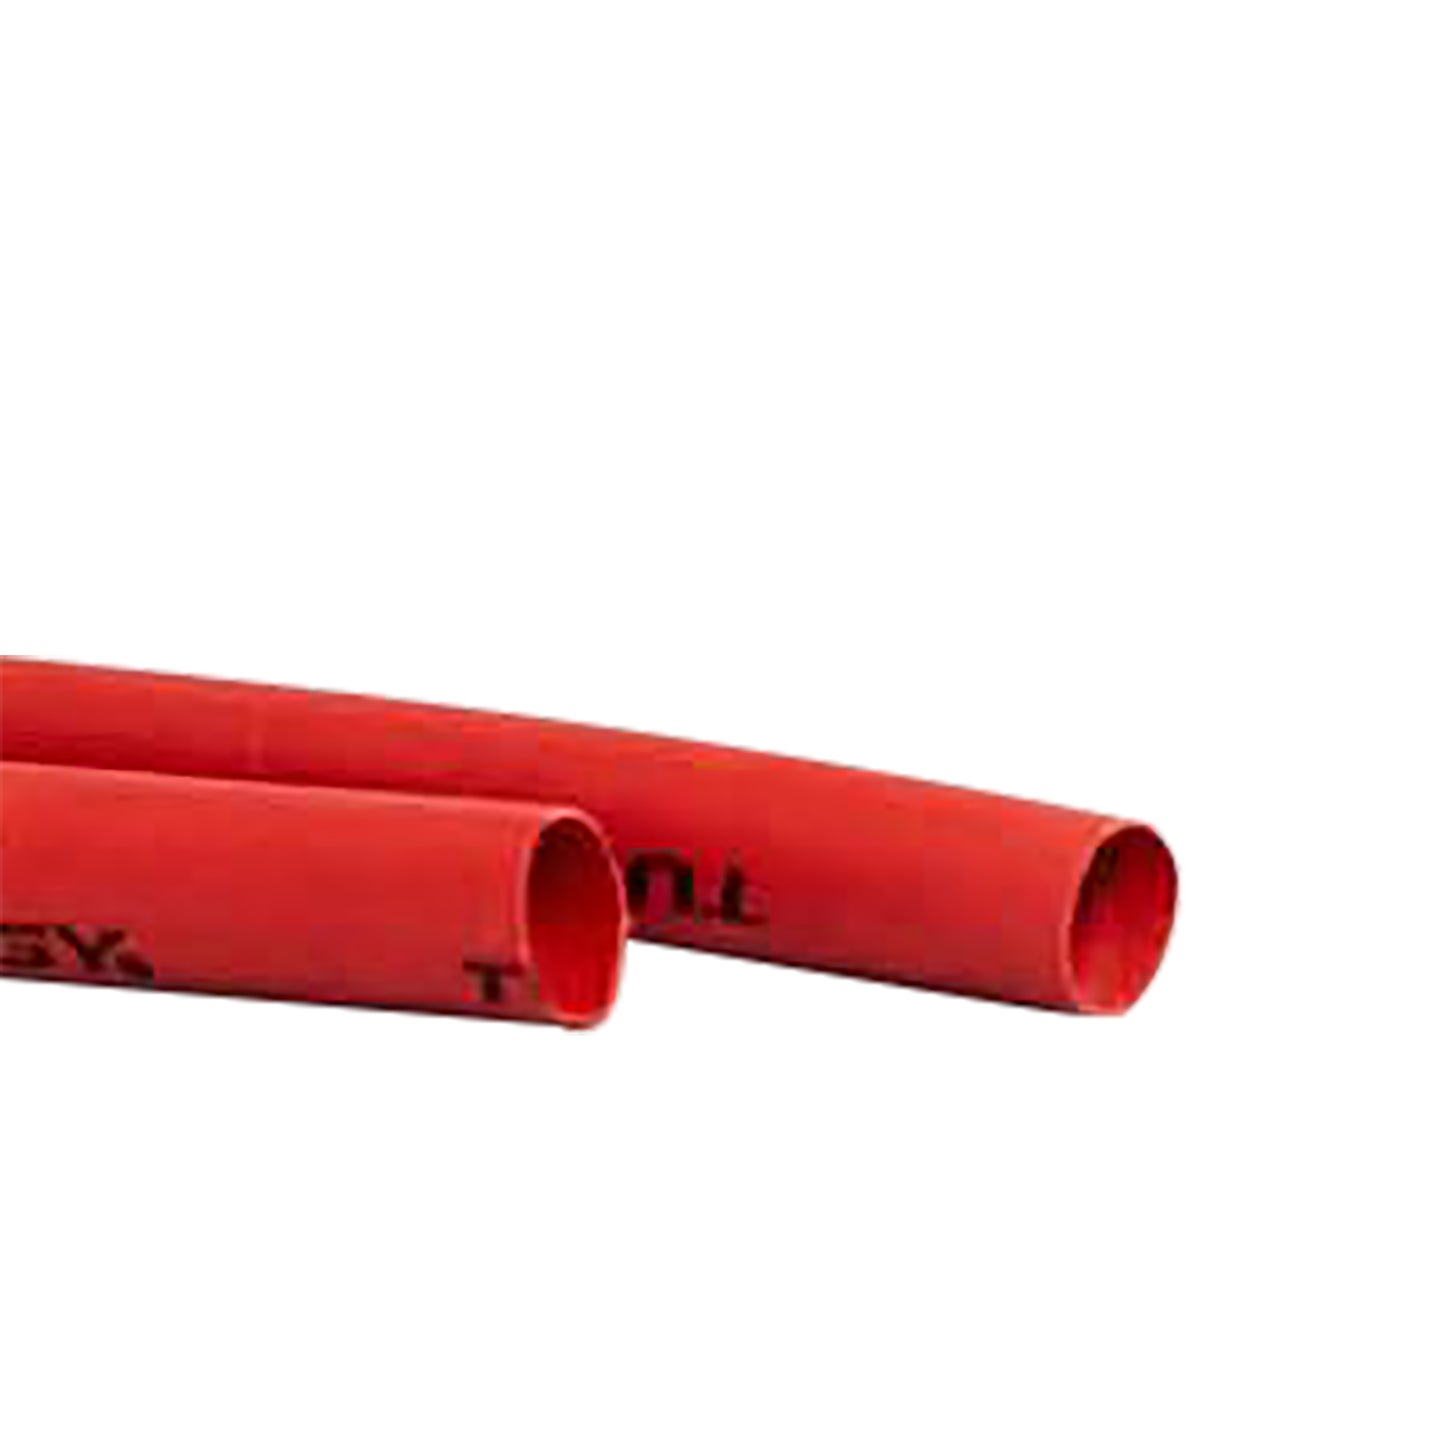 Flexible Thin Single Wall Non-Adhesive Heat Shrink Tubing 2:1 Red 3/32" ID - 25' Ft Spool